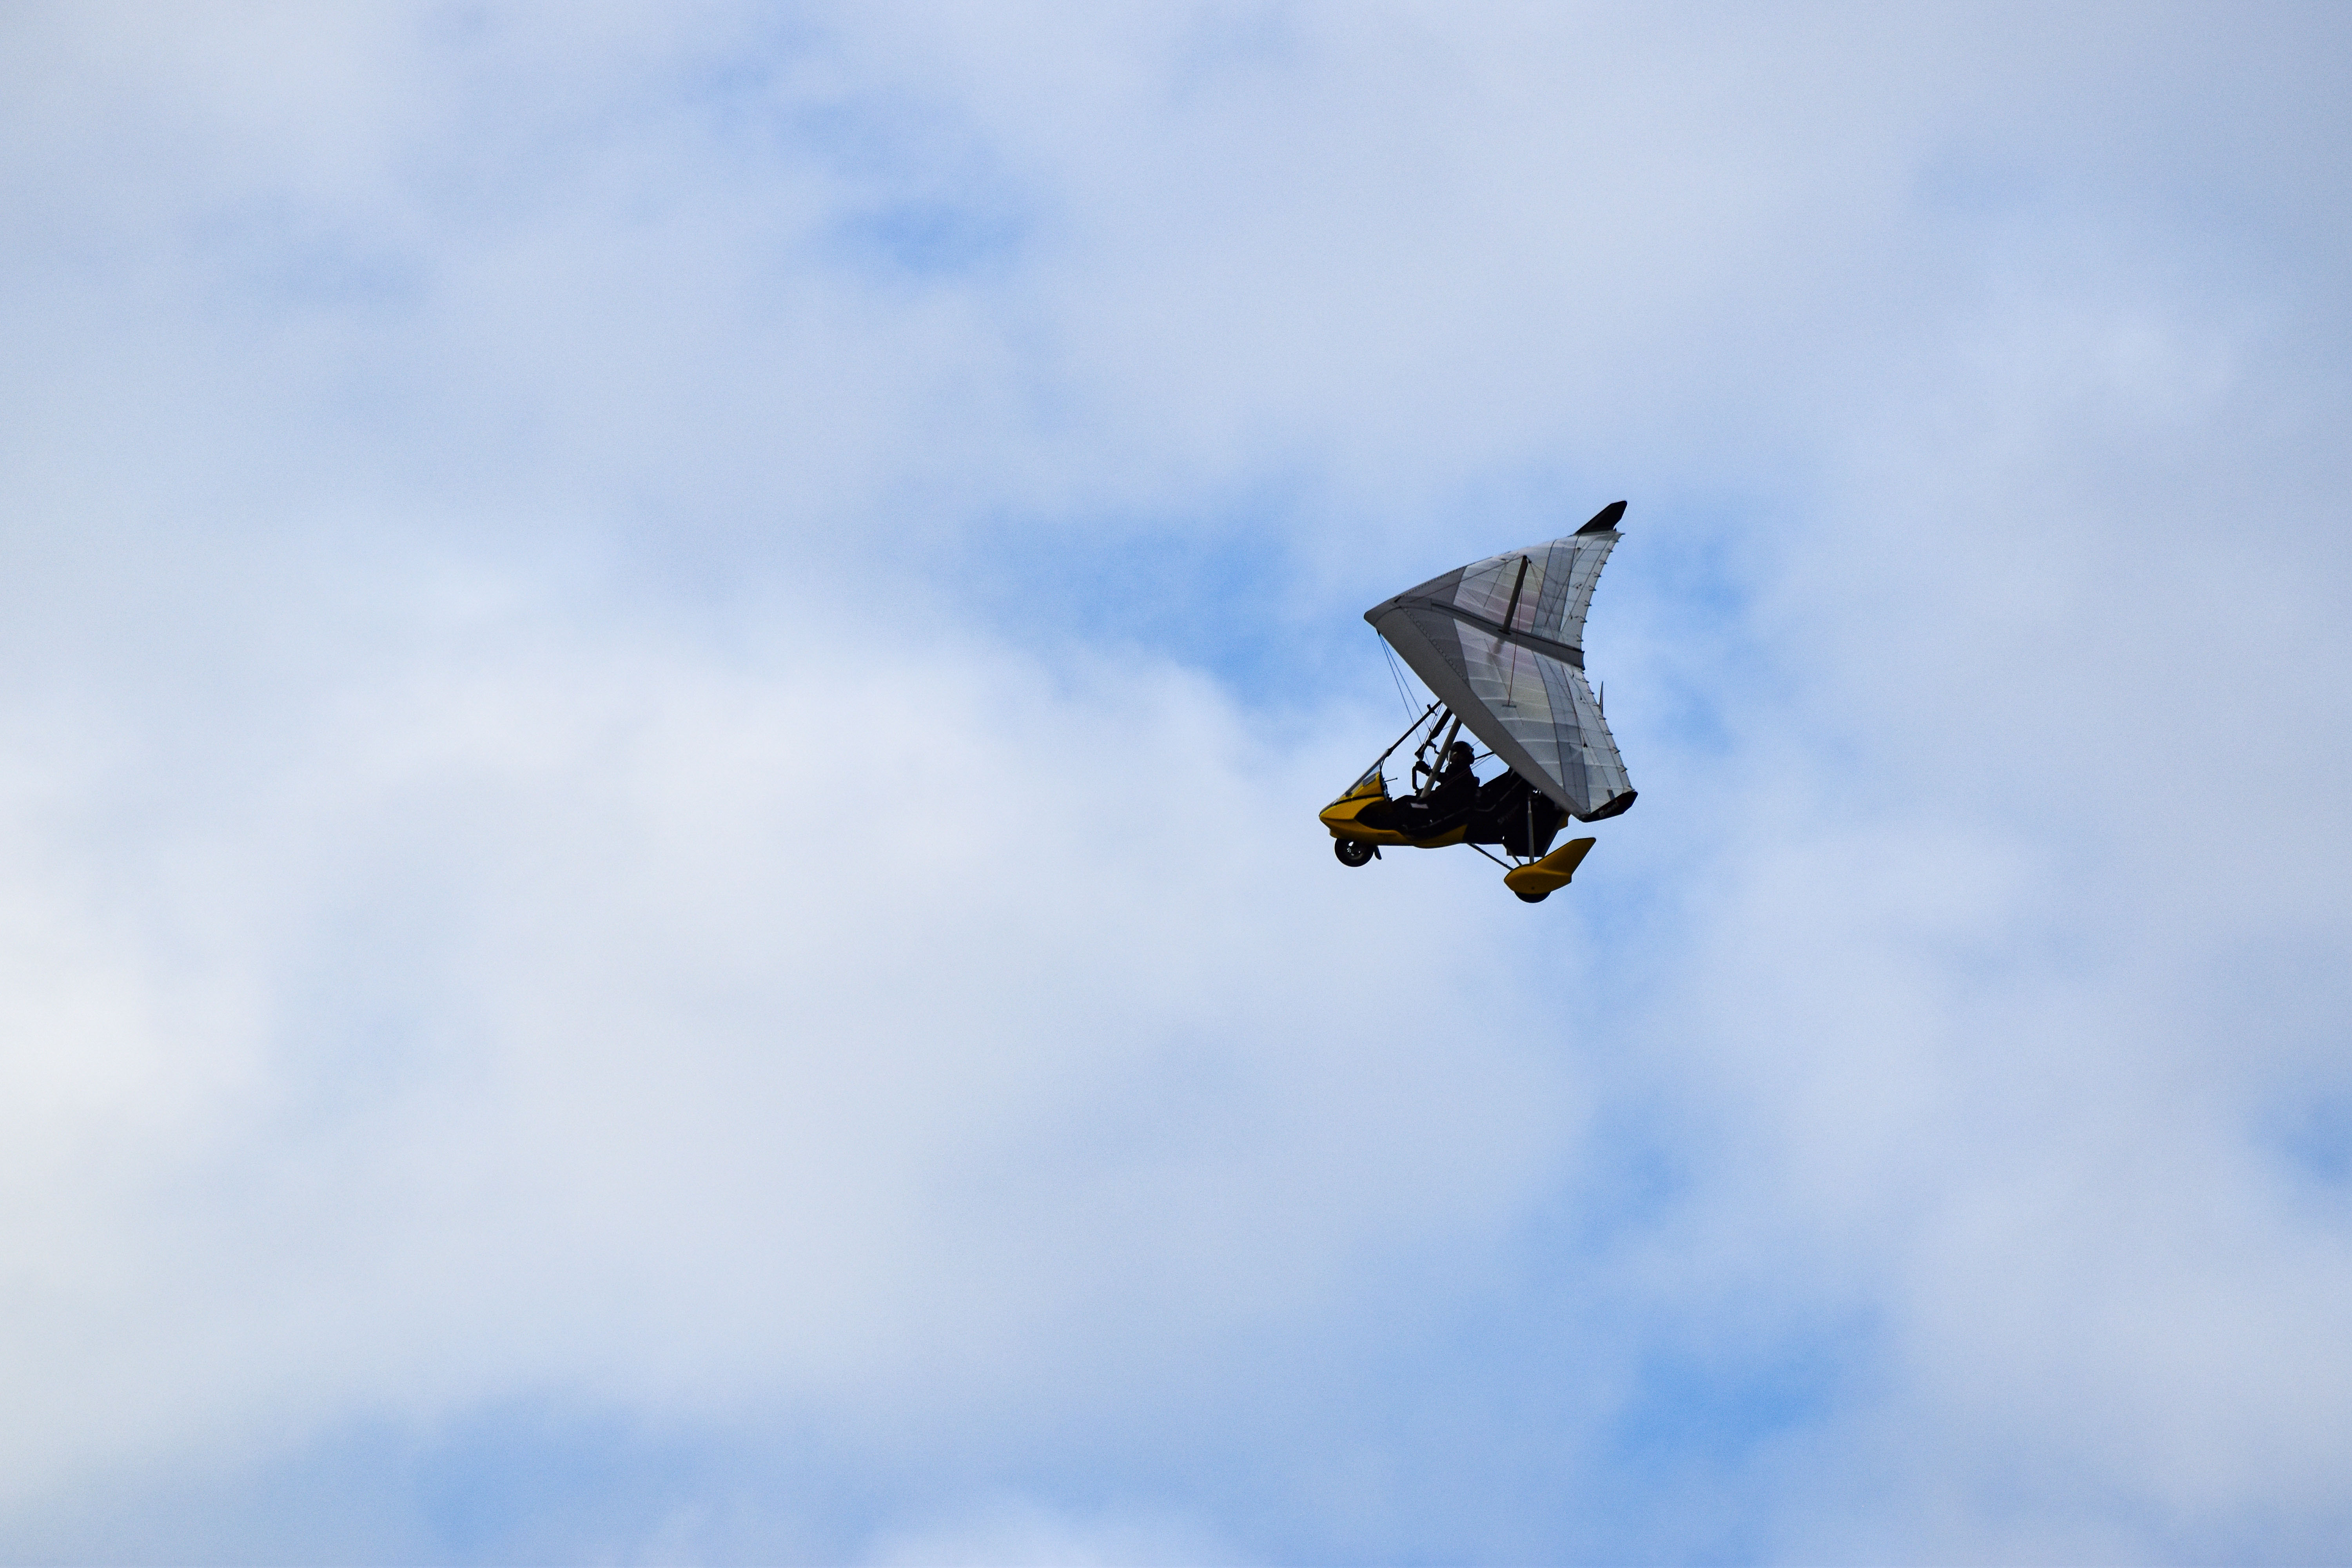 fly/en-vol-bionix2-skypper-evo-en-vol-in-fly-ulm-pendulaire-ultralight-trike-wings-9.jpg